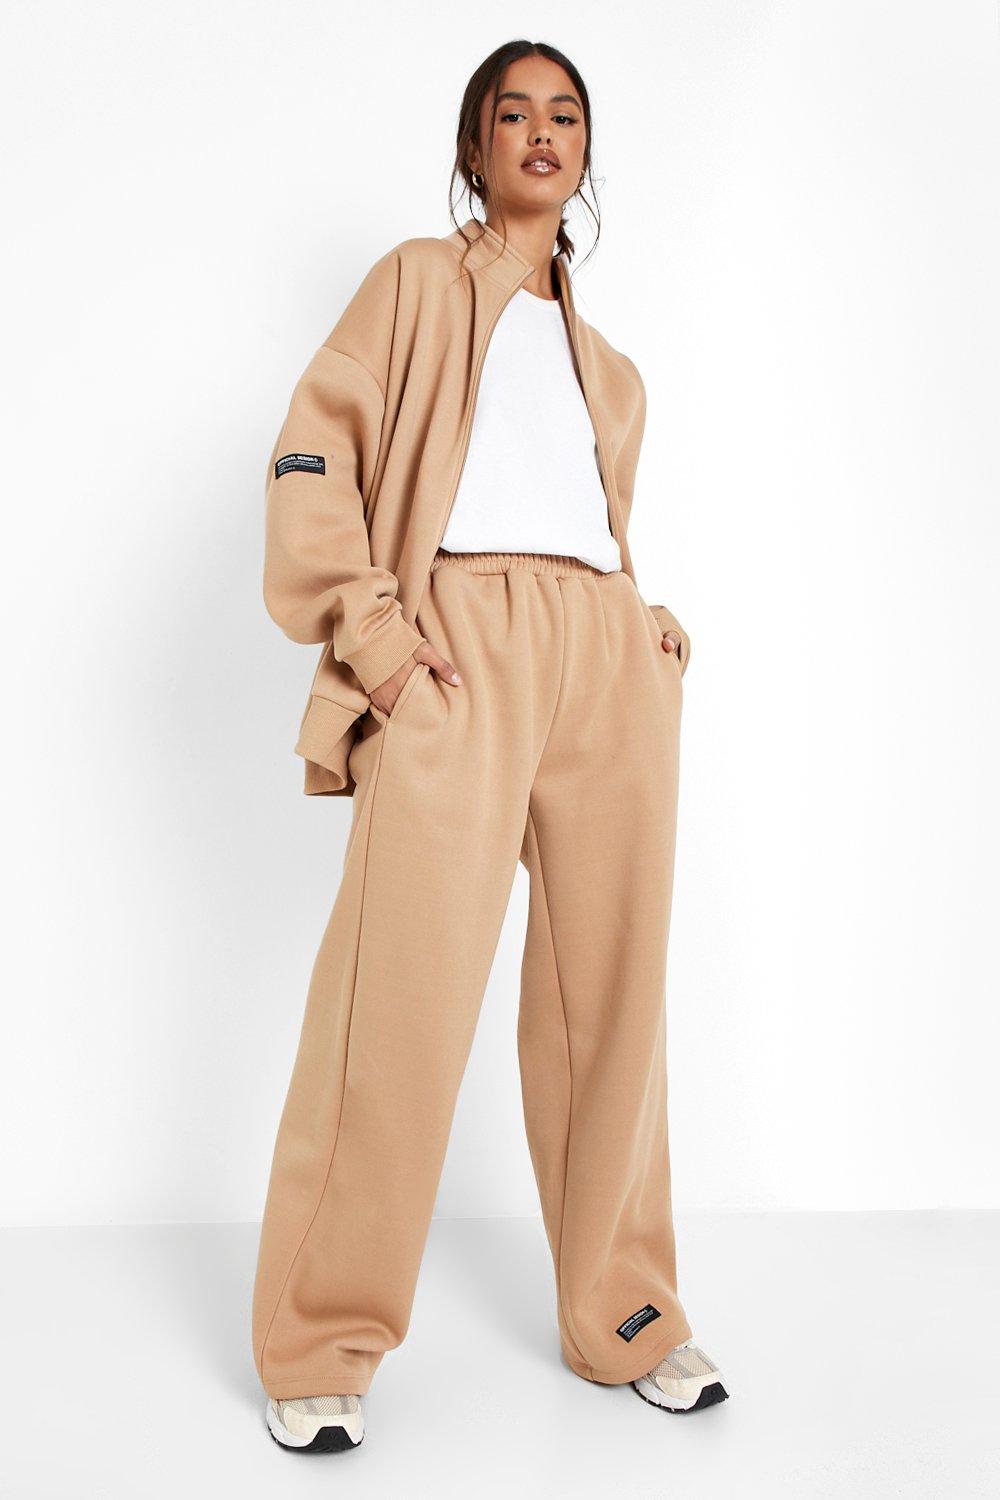 Boohoo Lace Trousers and Zara Jacket — throughCLOSETDOORS